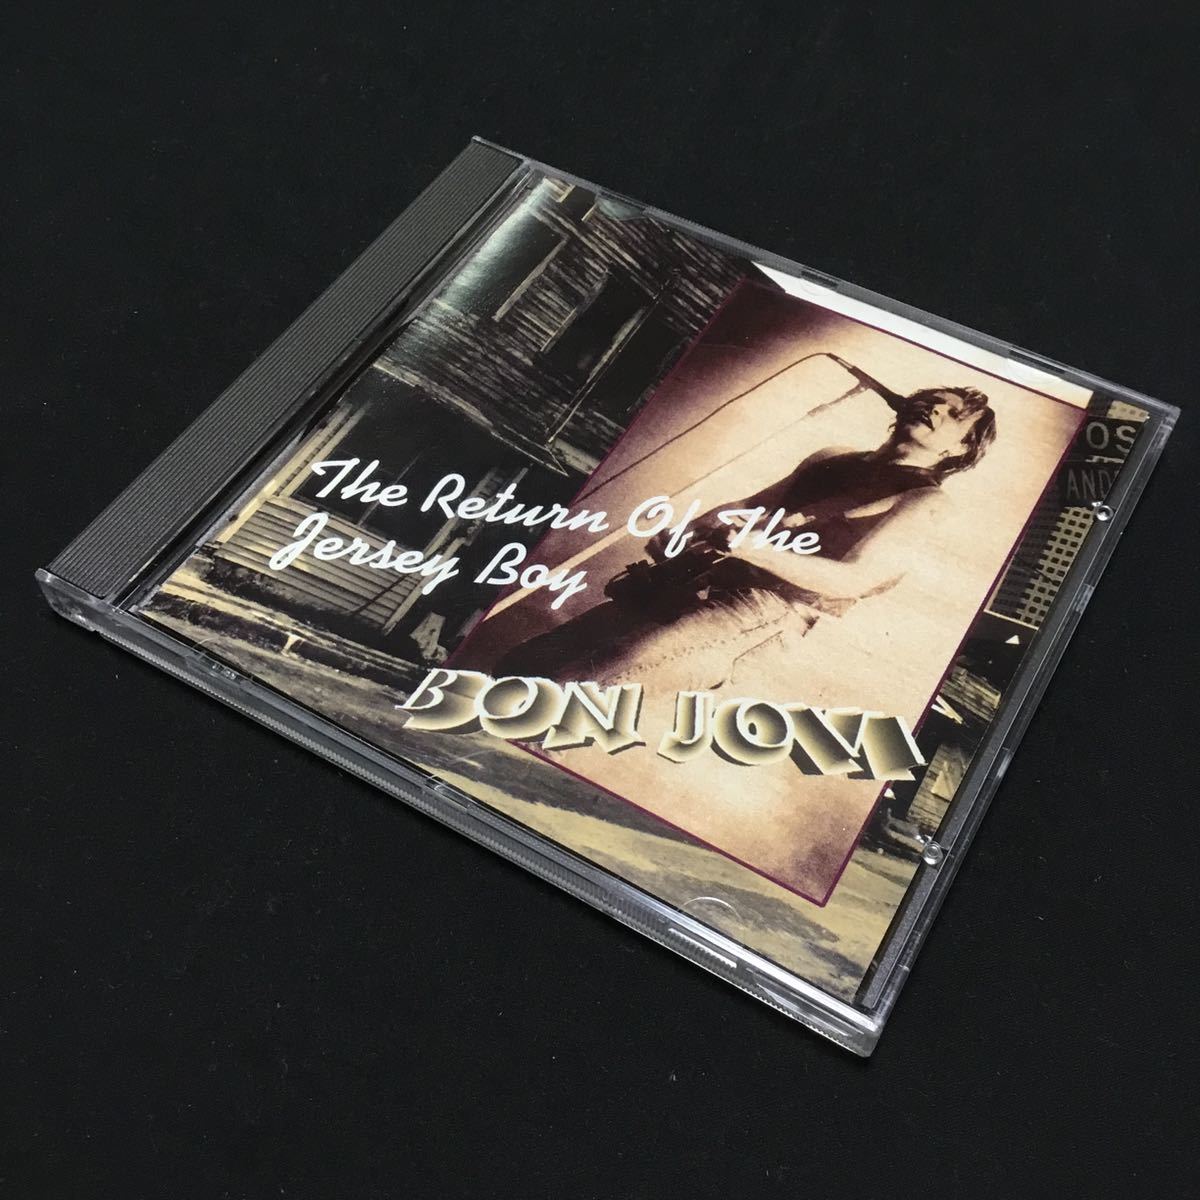 CD Bon Jovi The return of the jersey boy wot-1009 диск прекрасный товар 